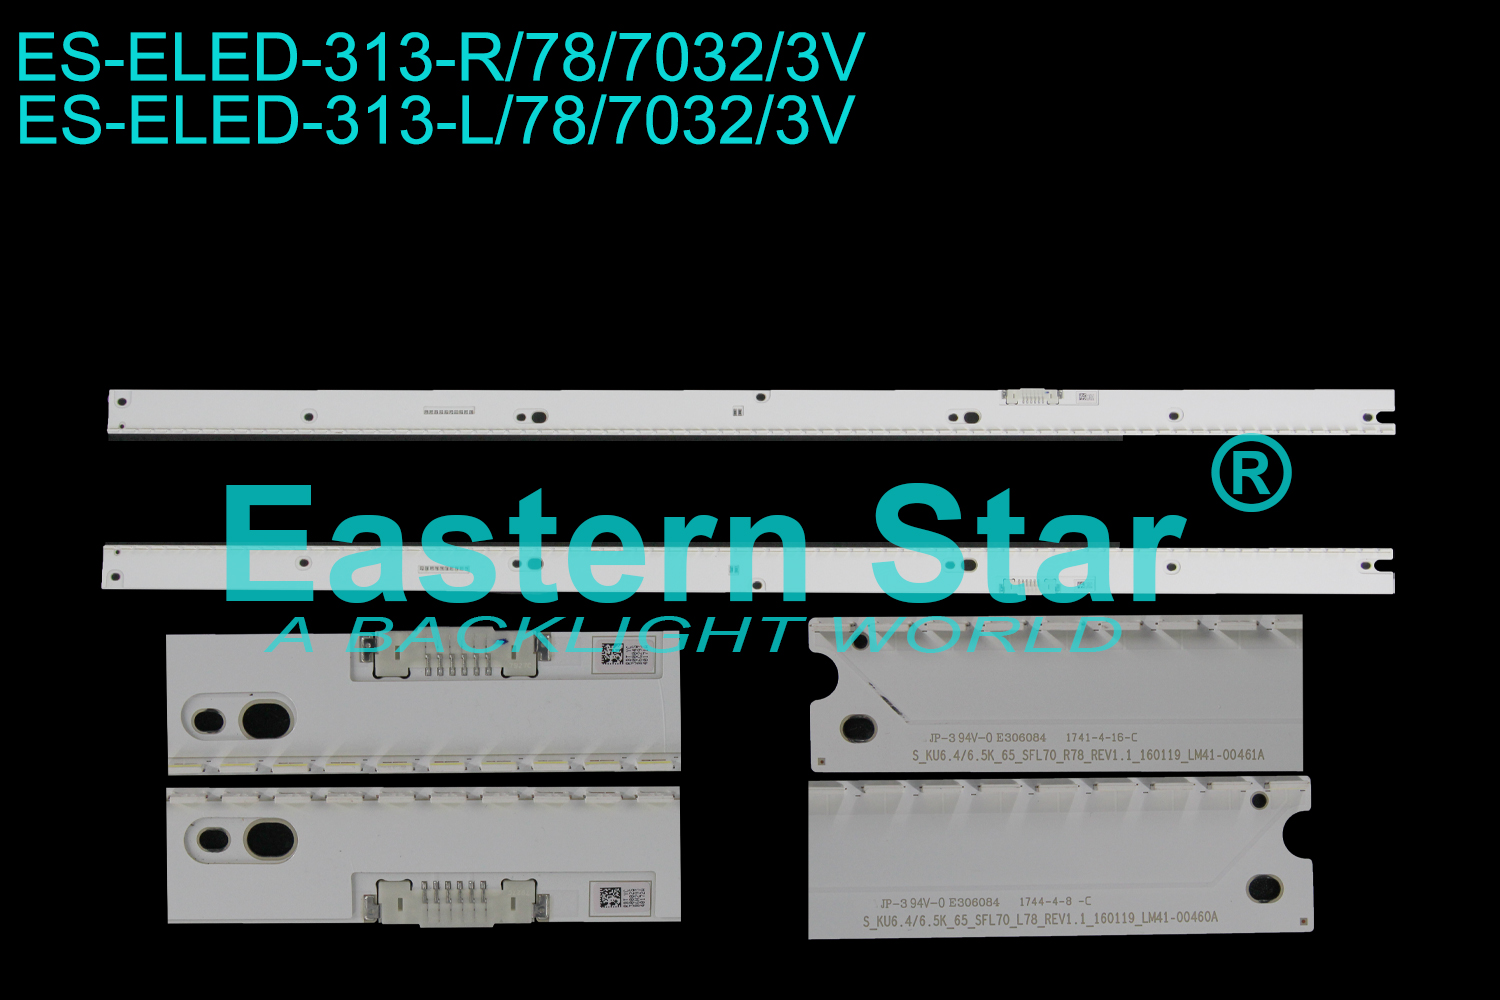 ES-ELED-313 ELED/EDGE TV backlight use for 65'' Samsung UN65KU7000FXZA S_KU6.4/6.5K_65_SFL70_R/L78_REV1.1_160119_LM41-00461A BN96-40171A / BN96-40172A / BN96-40173A / BN96-40174A LED STRIPS(2)